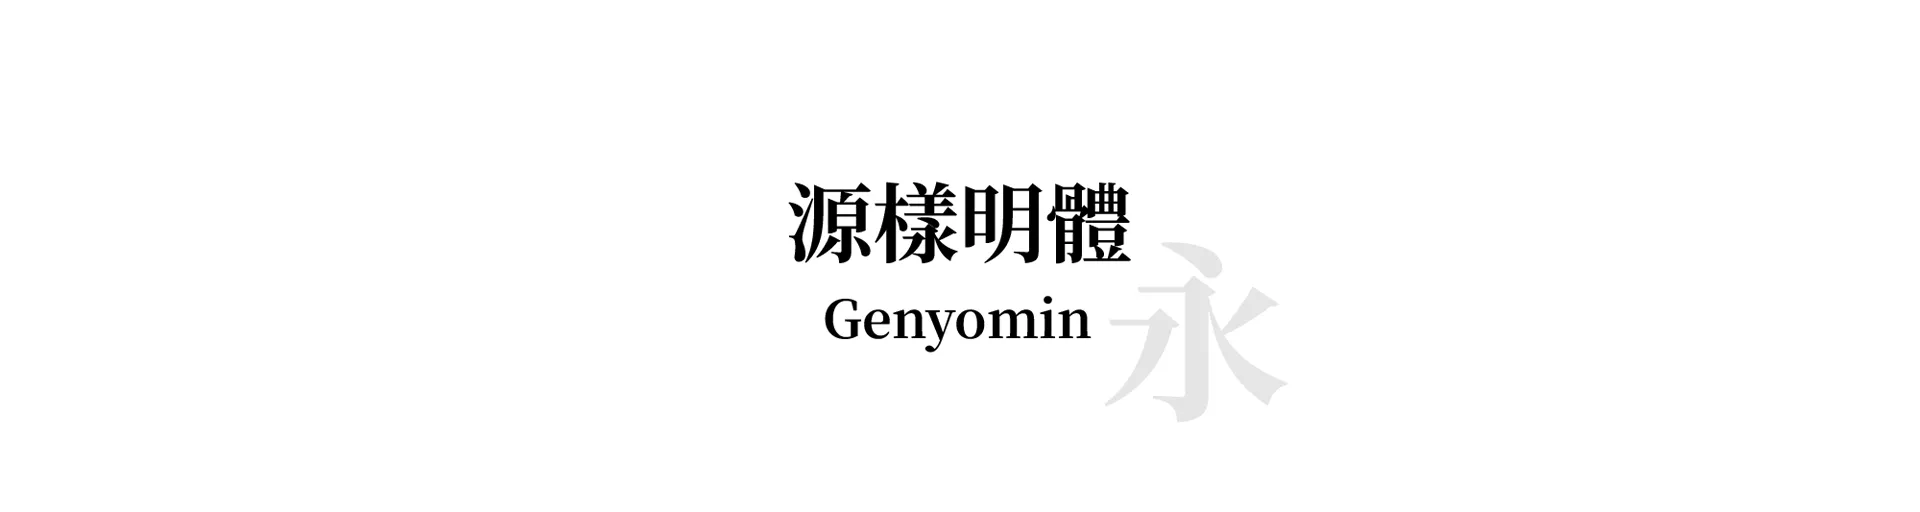 Genyomin